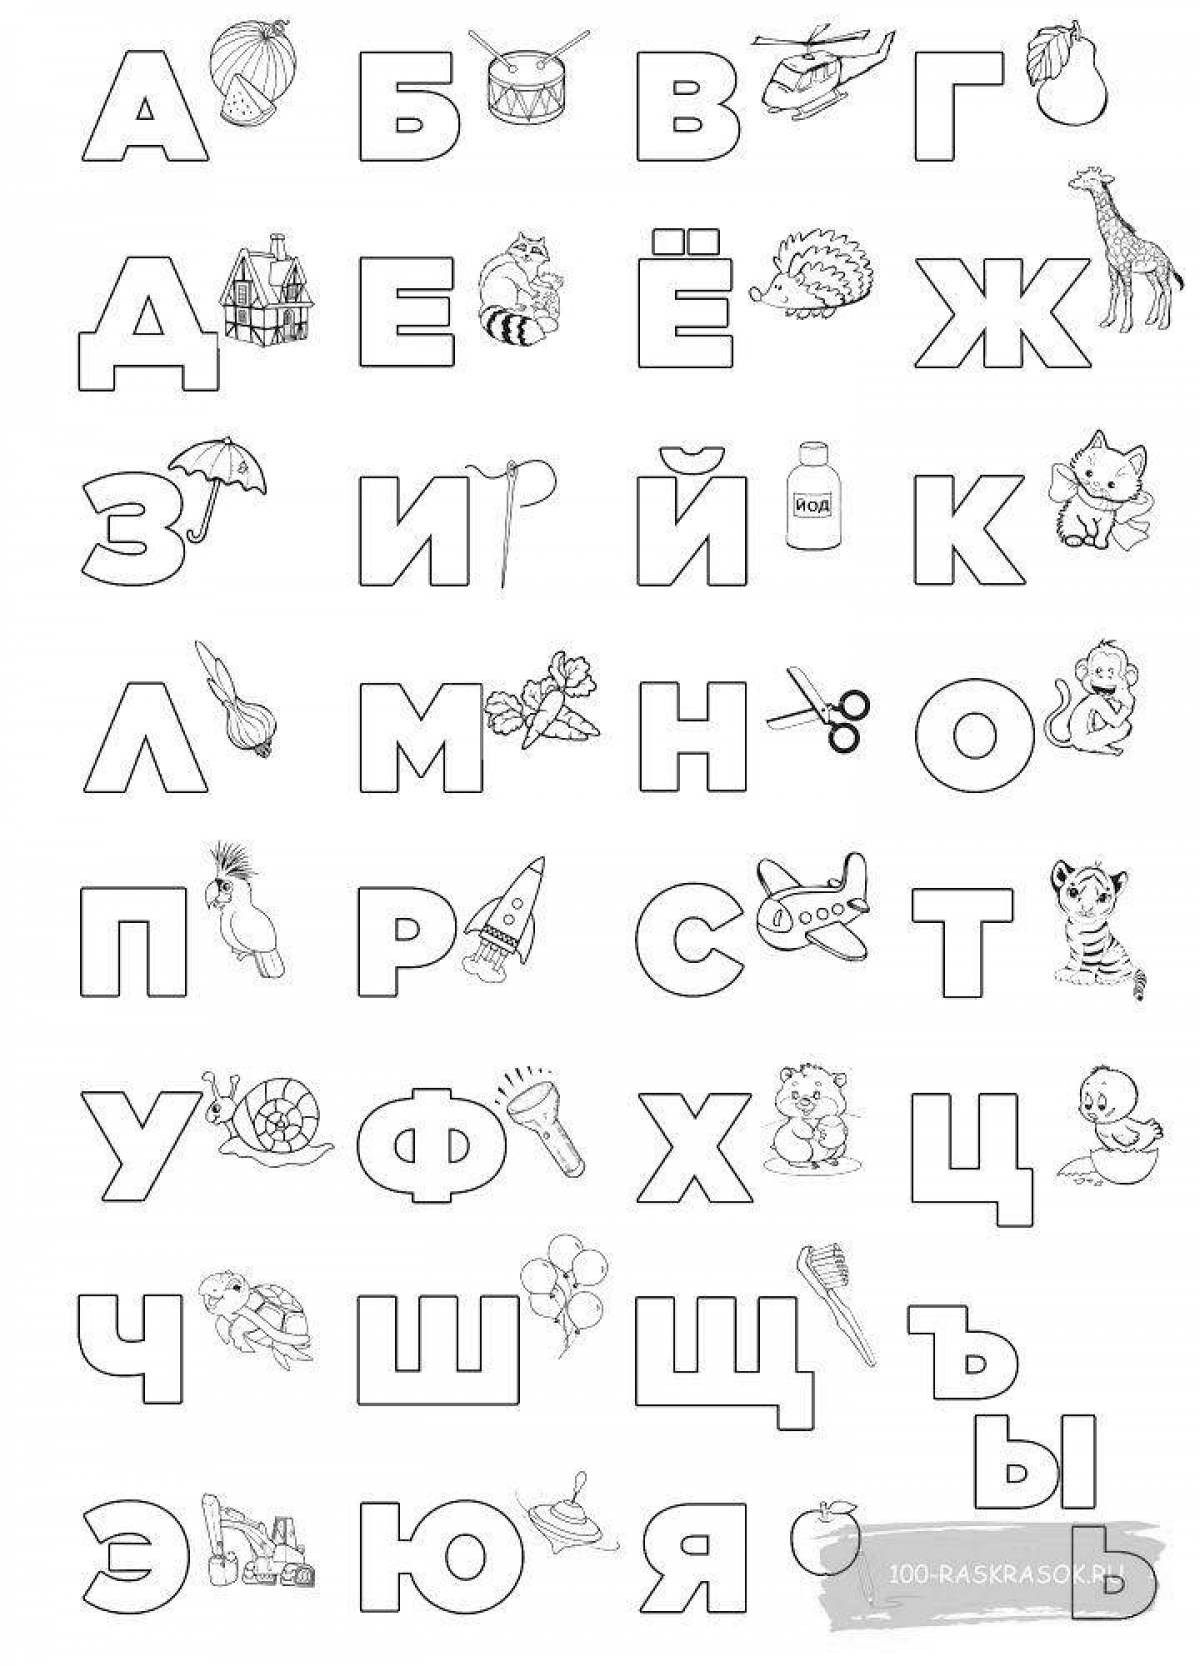 Magic Russian alphabet coloring book